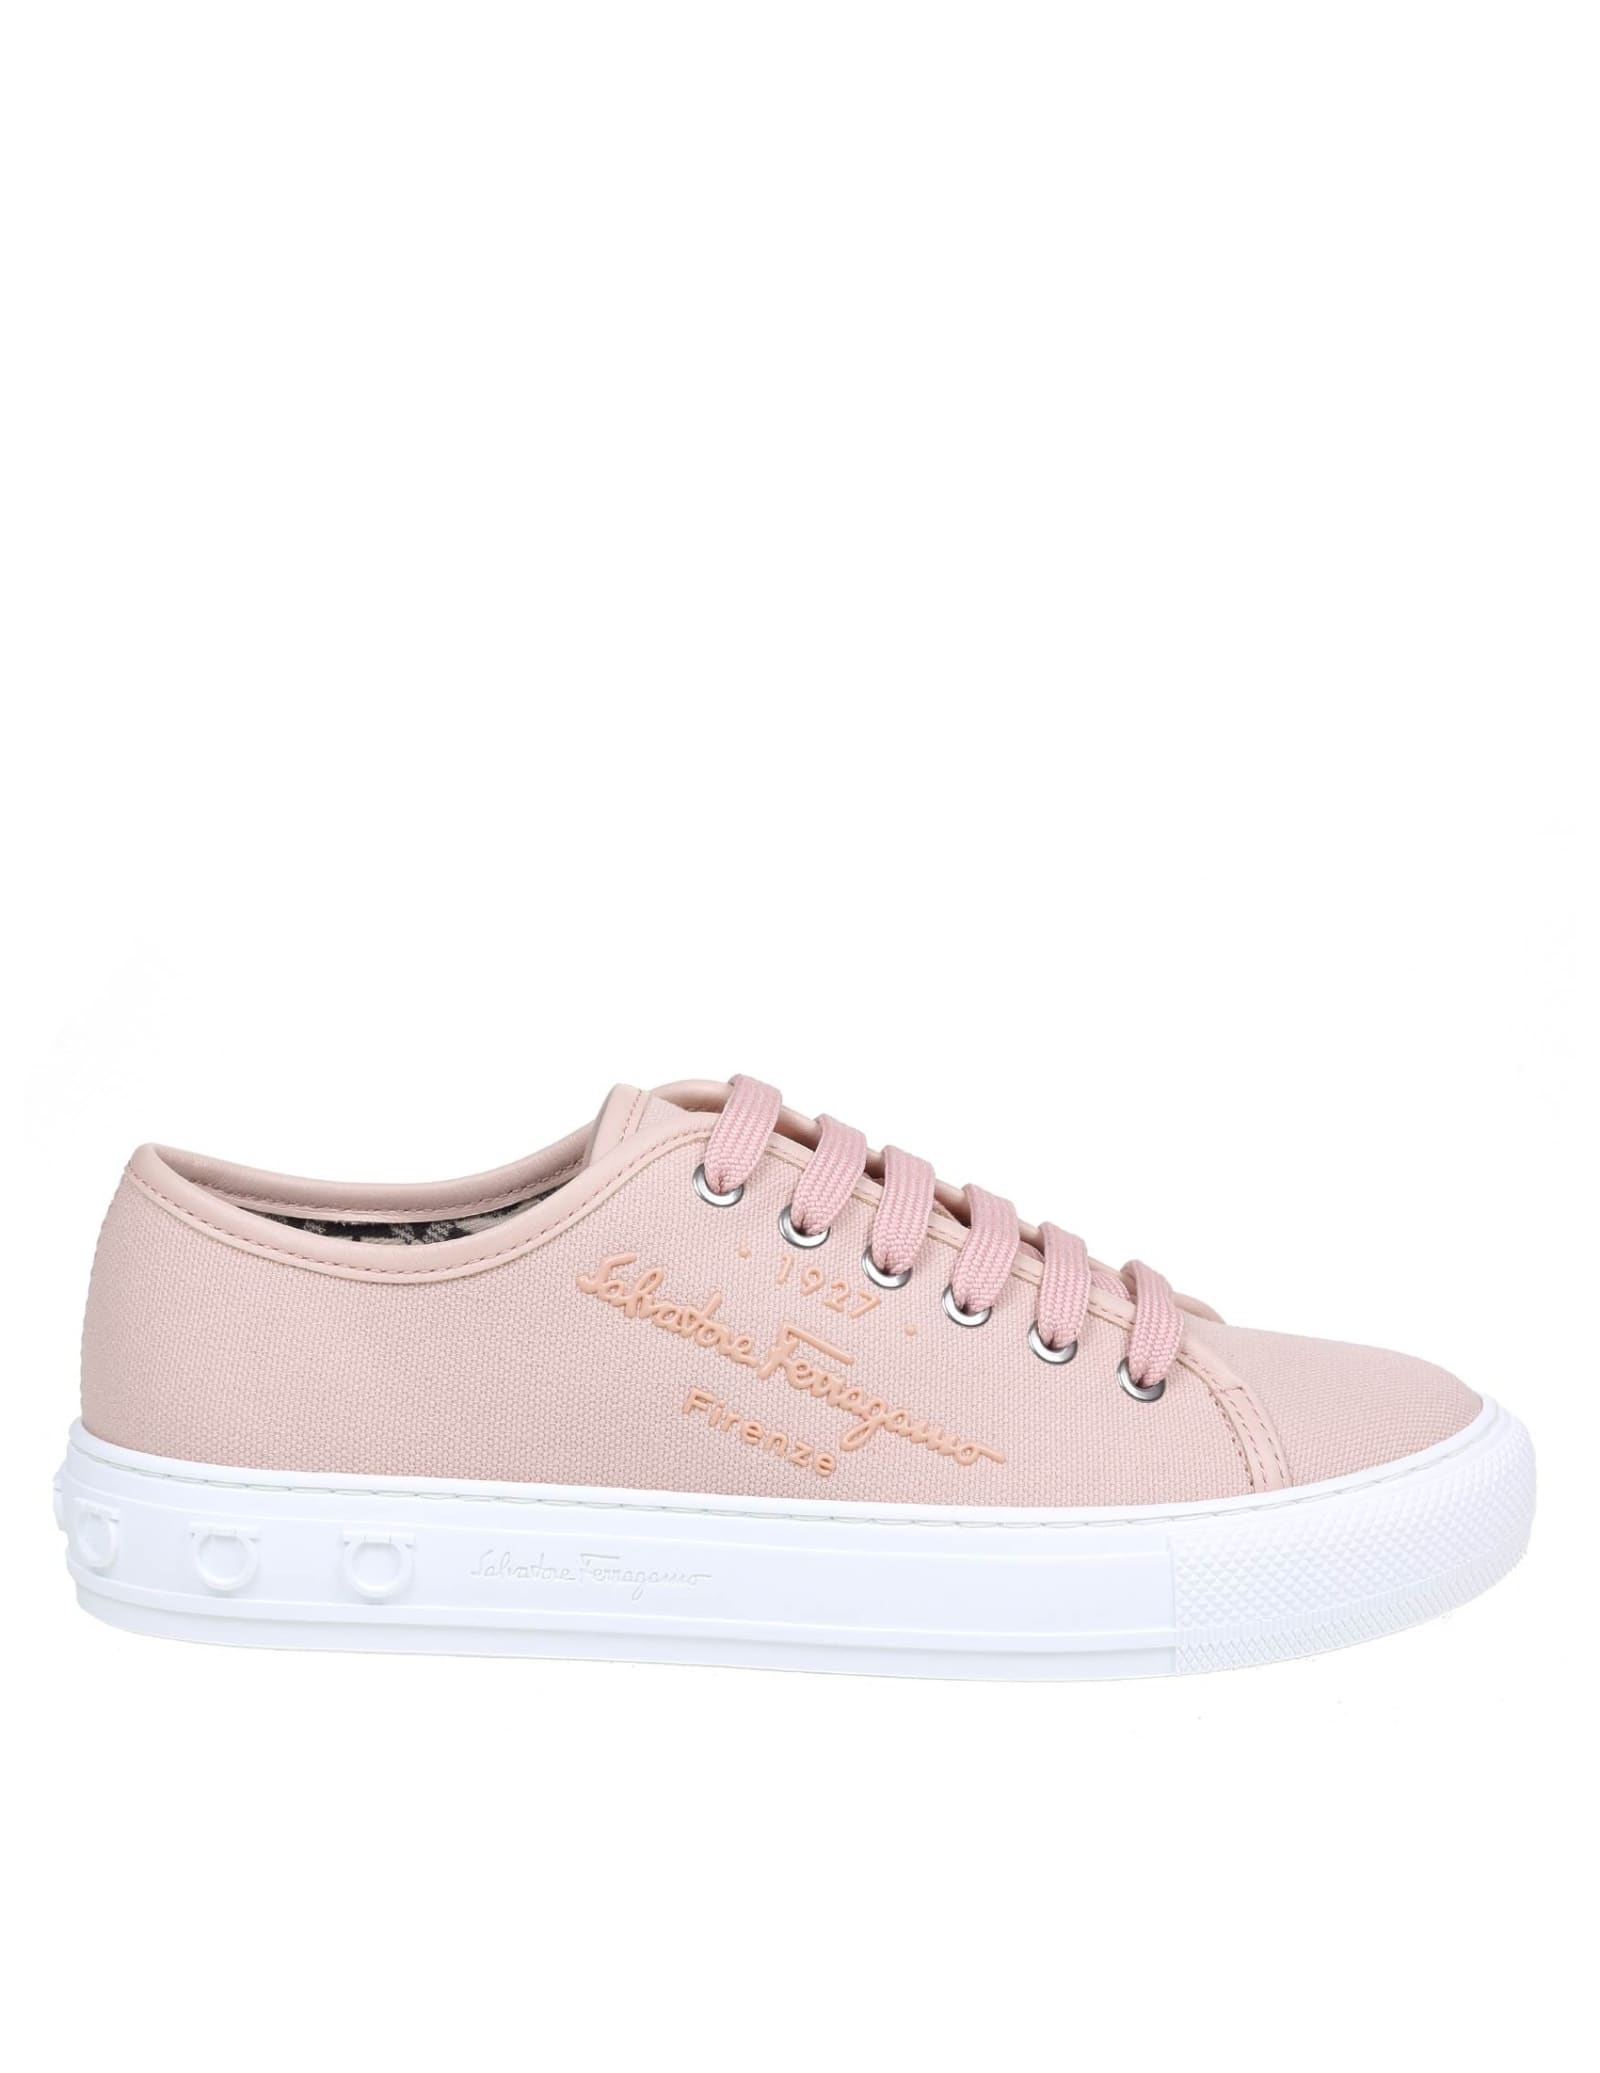 Salvatore Ferragamo Sneakers Color Pink